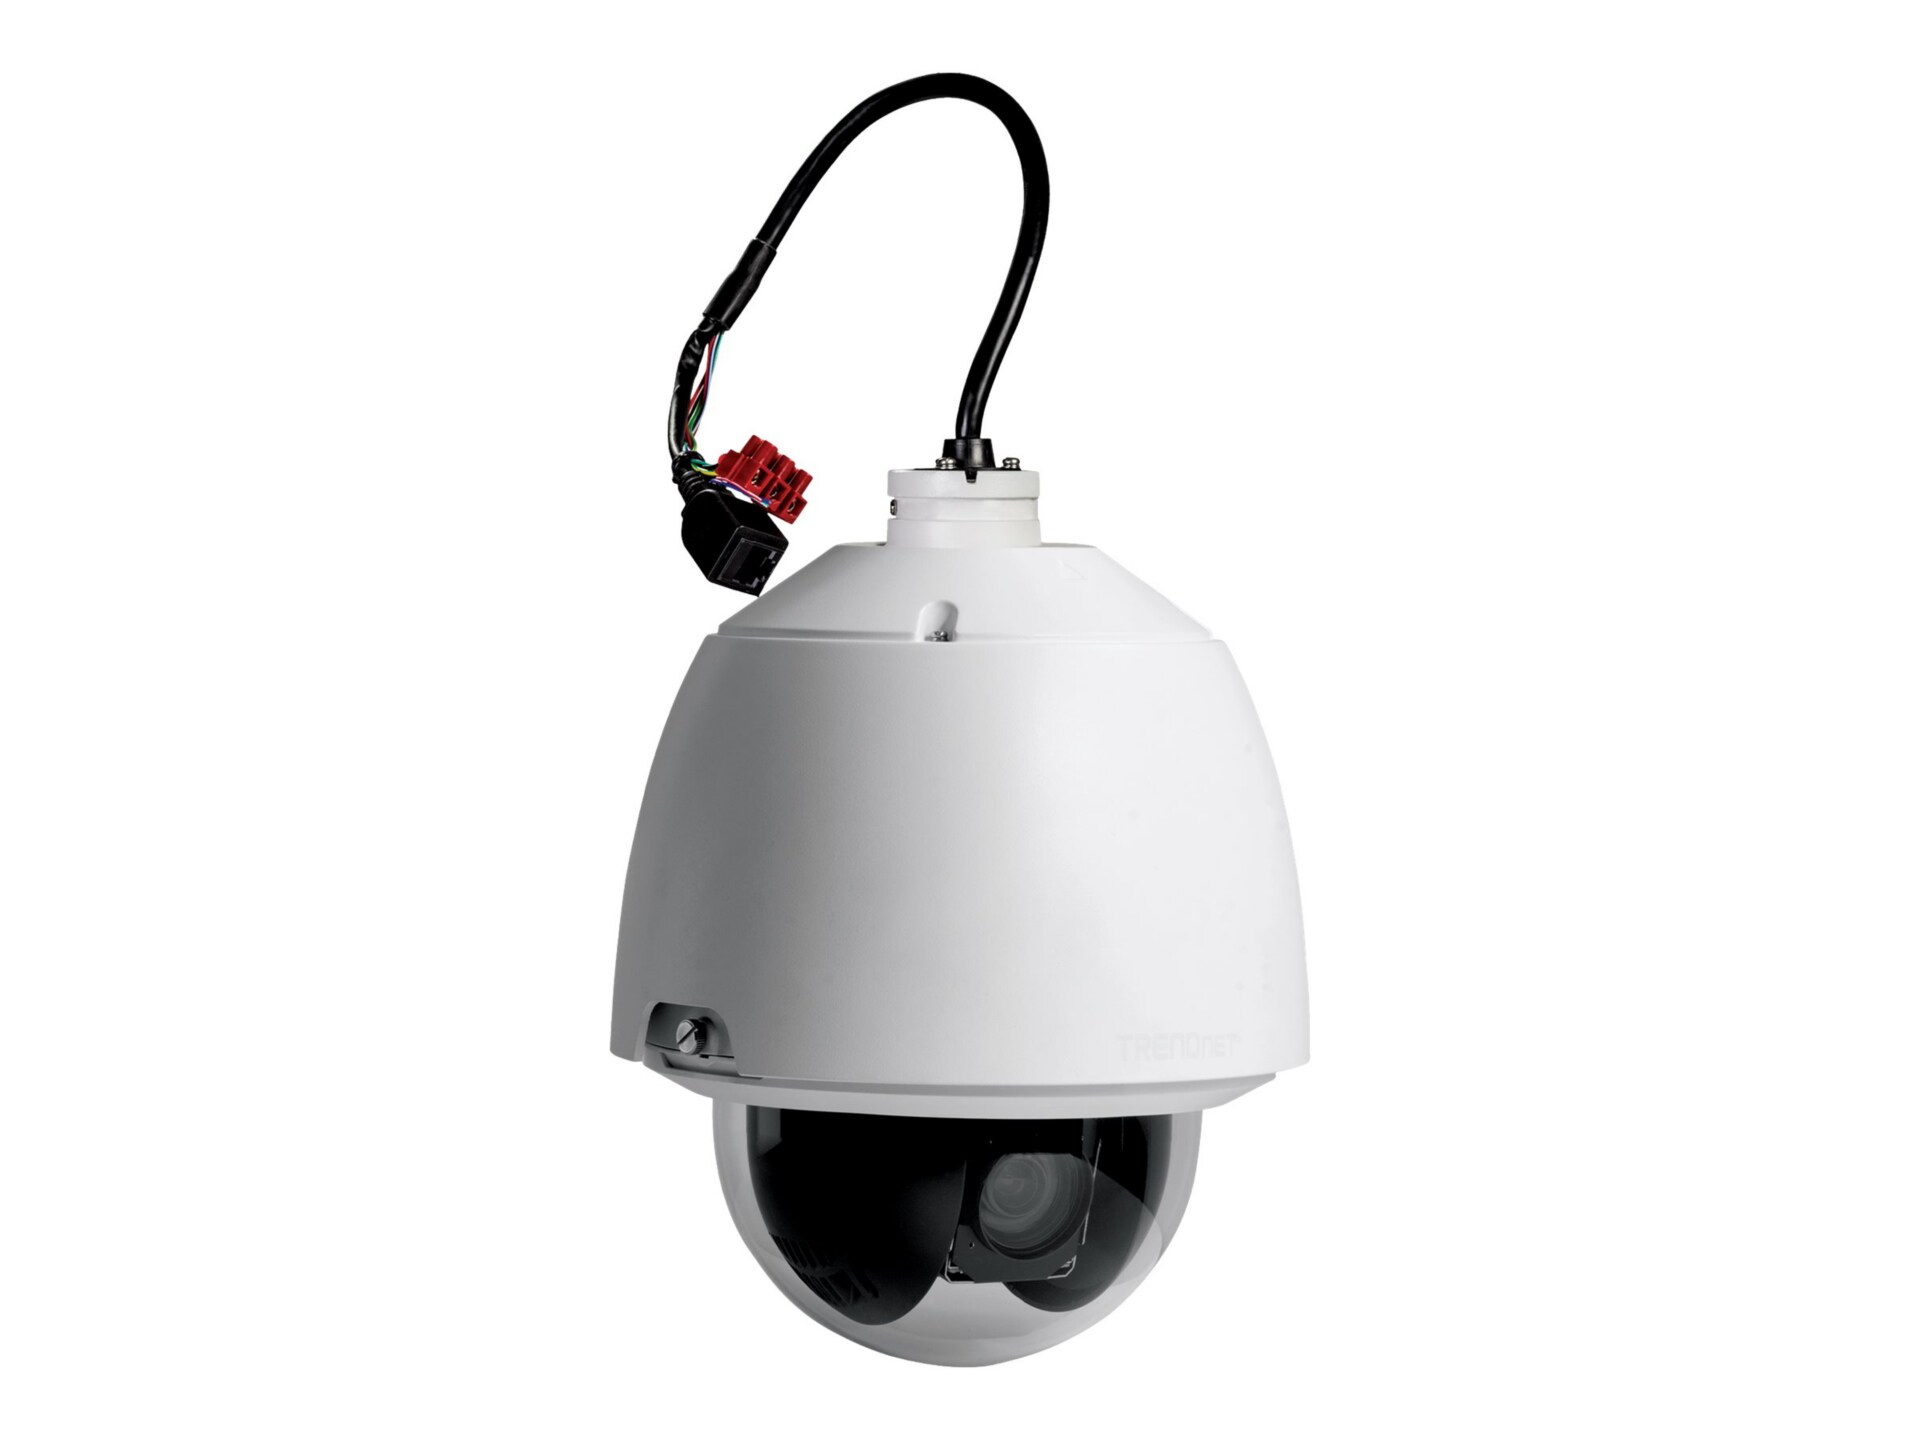 TRENDnet TV TV-IP450P Outdoor 1.3 MP HD PoE+ Speed Dome Network Camera - network surveillance camera